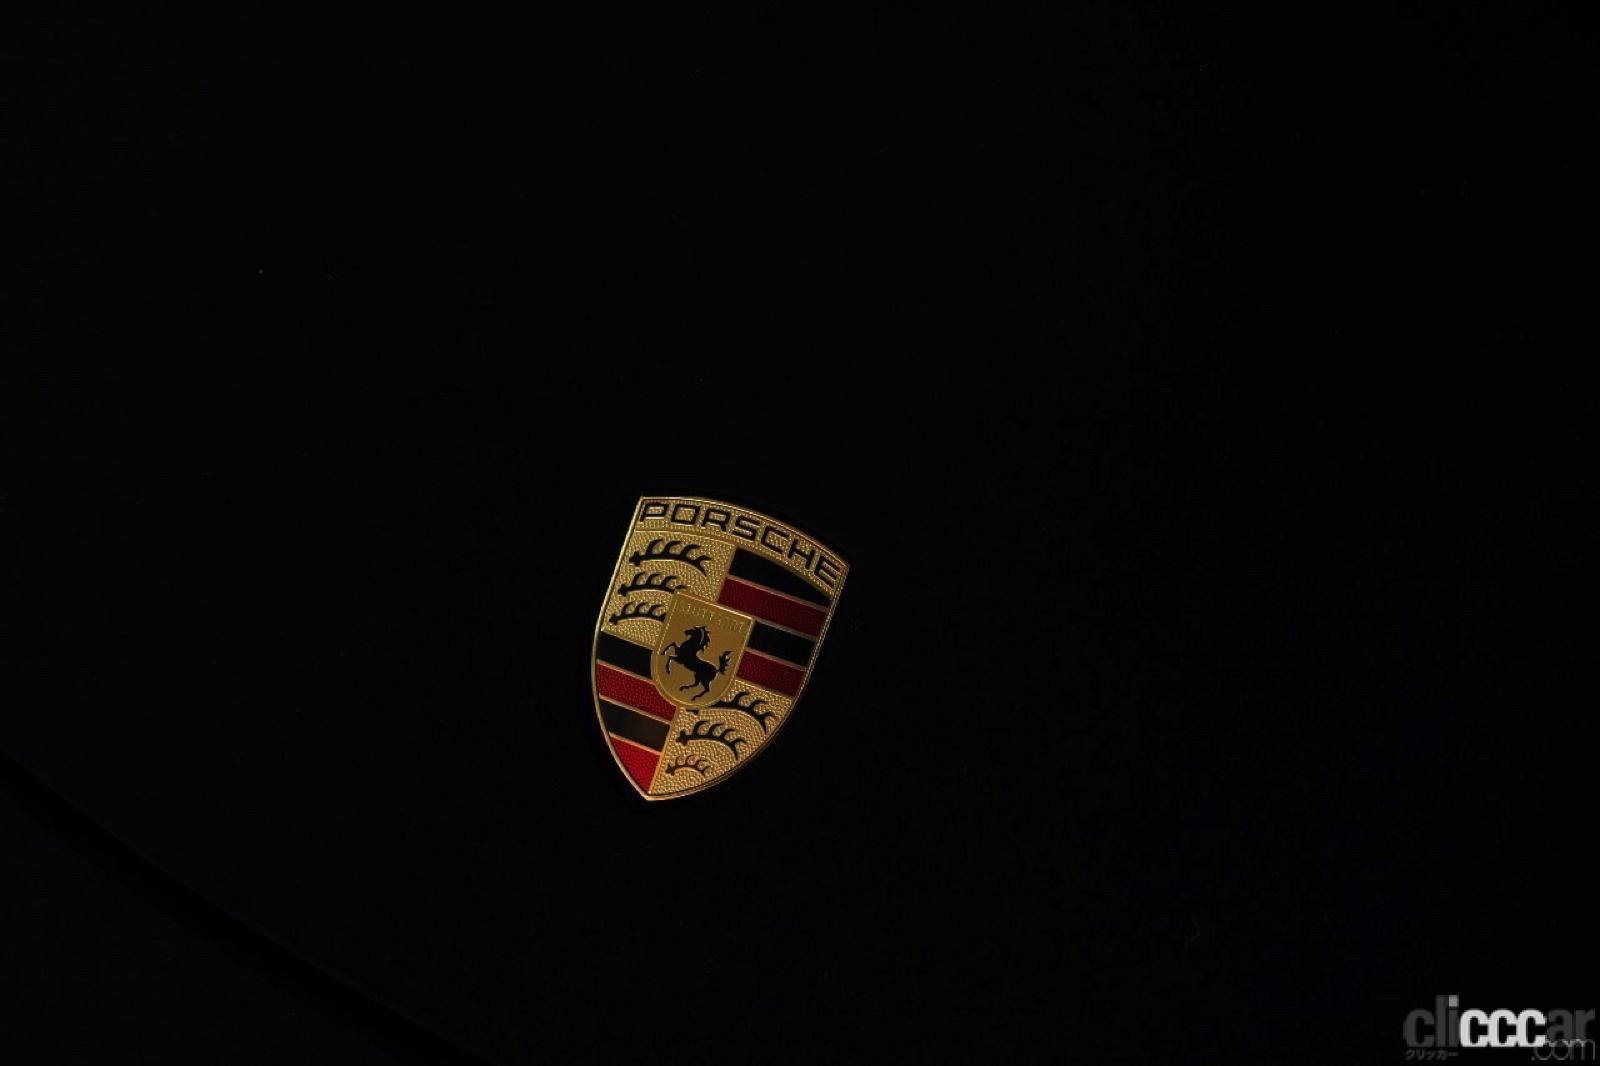 Blackest Porsche 6 画像 世界一を更新 超 真っ黒 なポルシェ911が名古屋に出没 Clicccar Com